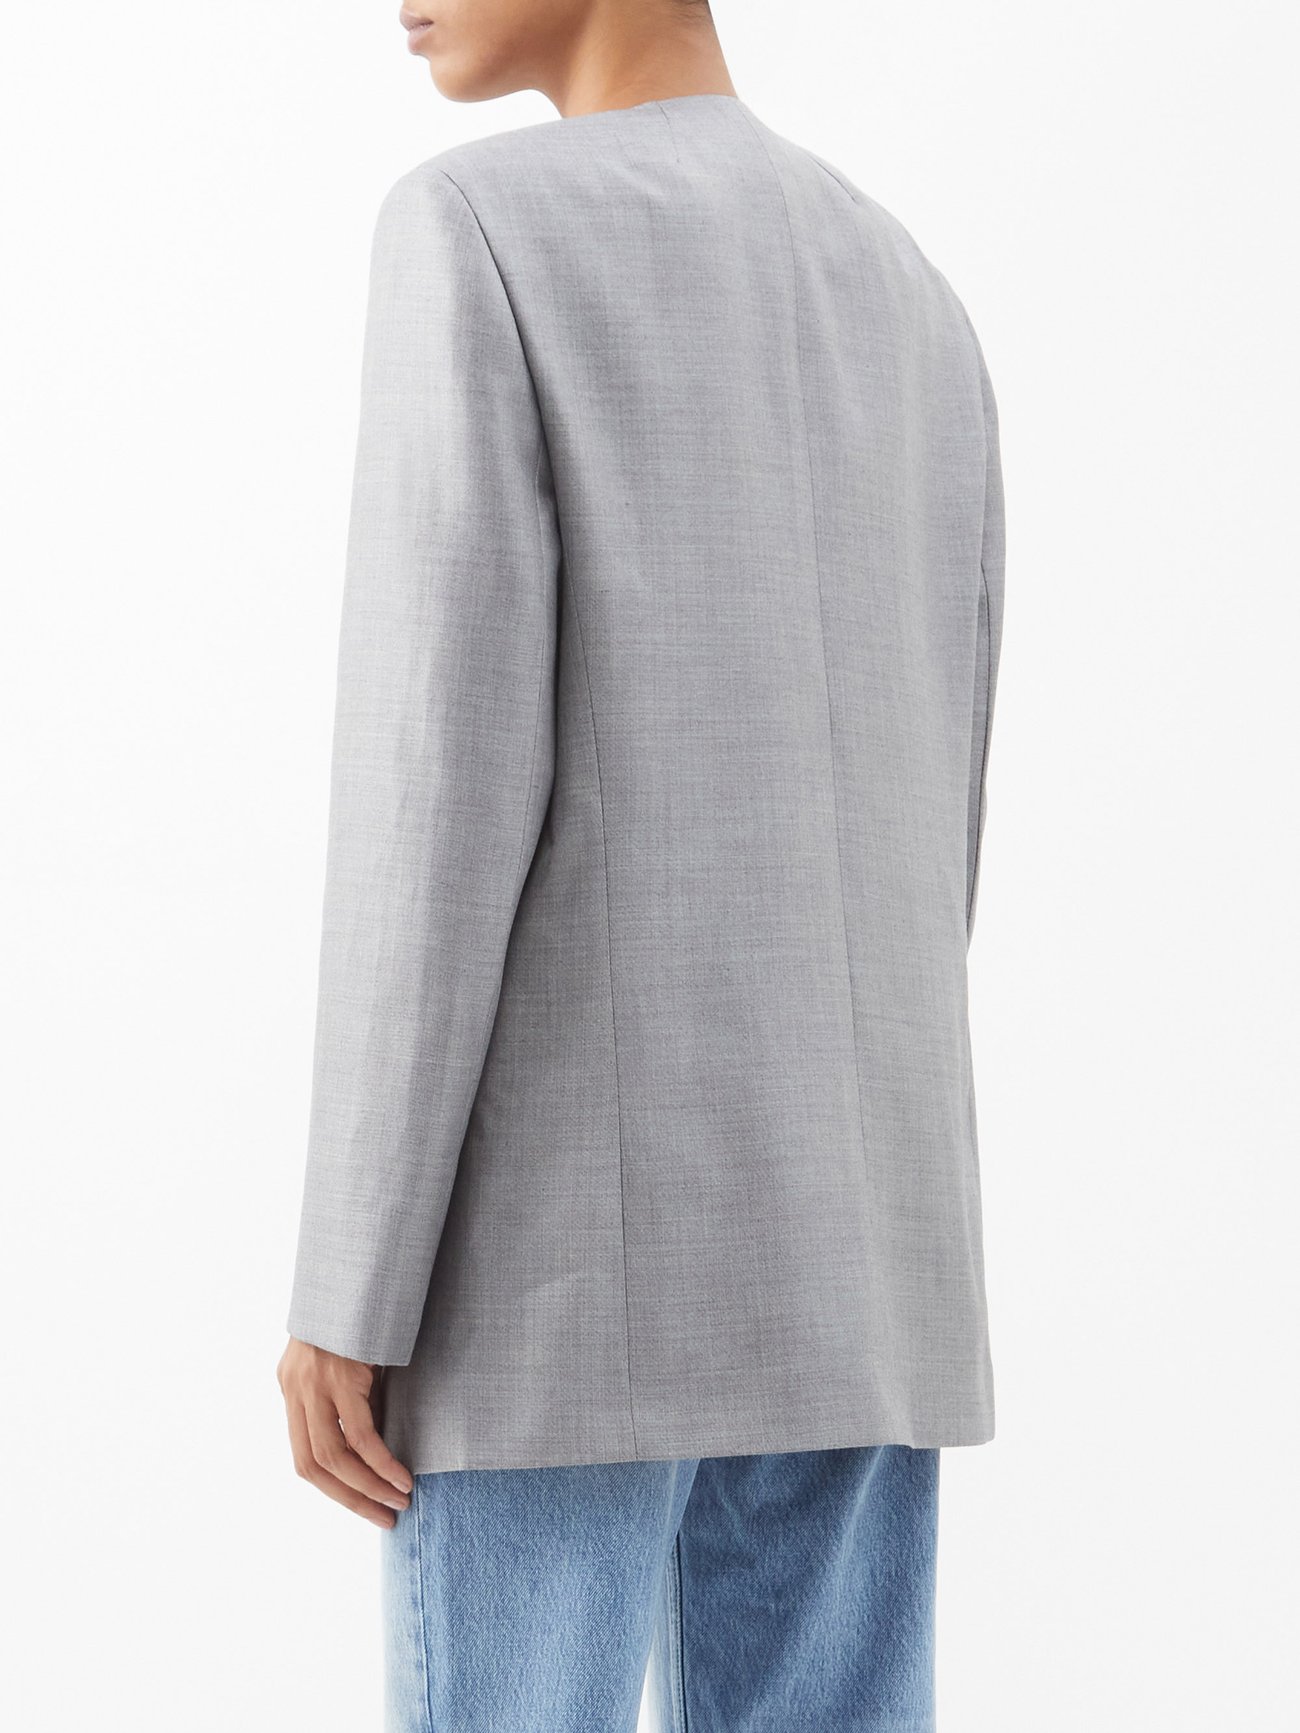 COS Collarless Wool Blazer in Gray for Men